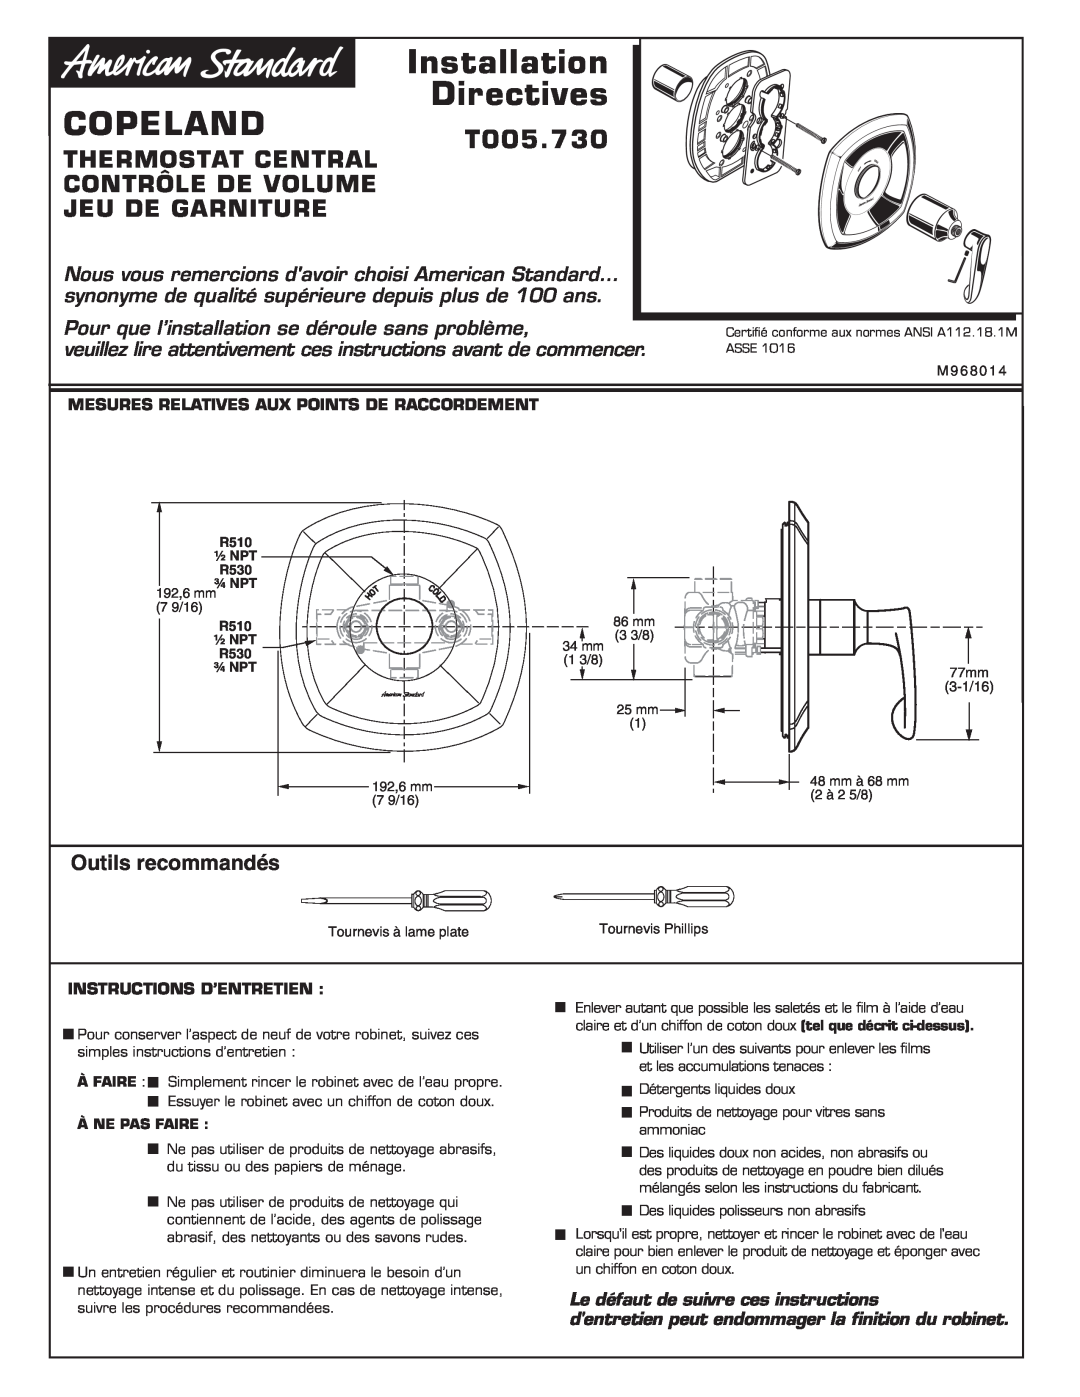 American Standard Installation Directives COPELANDT005.730, Thermostat Central Contrôle De Volume Jeu De Garniture 